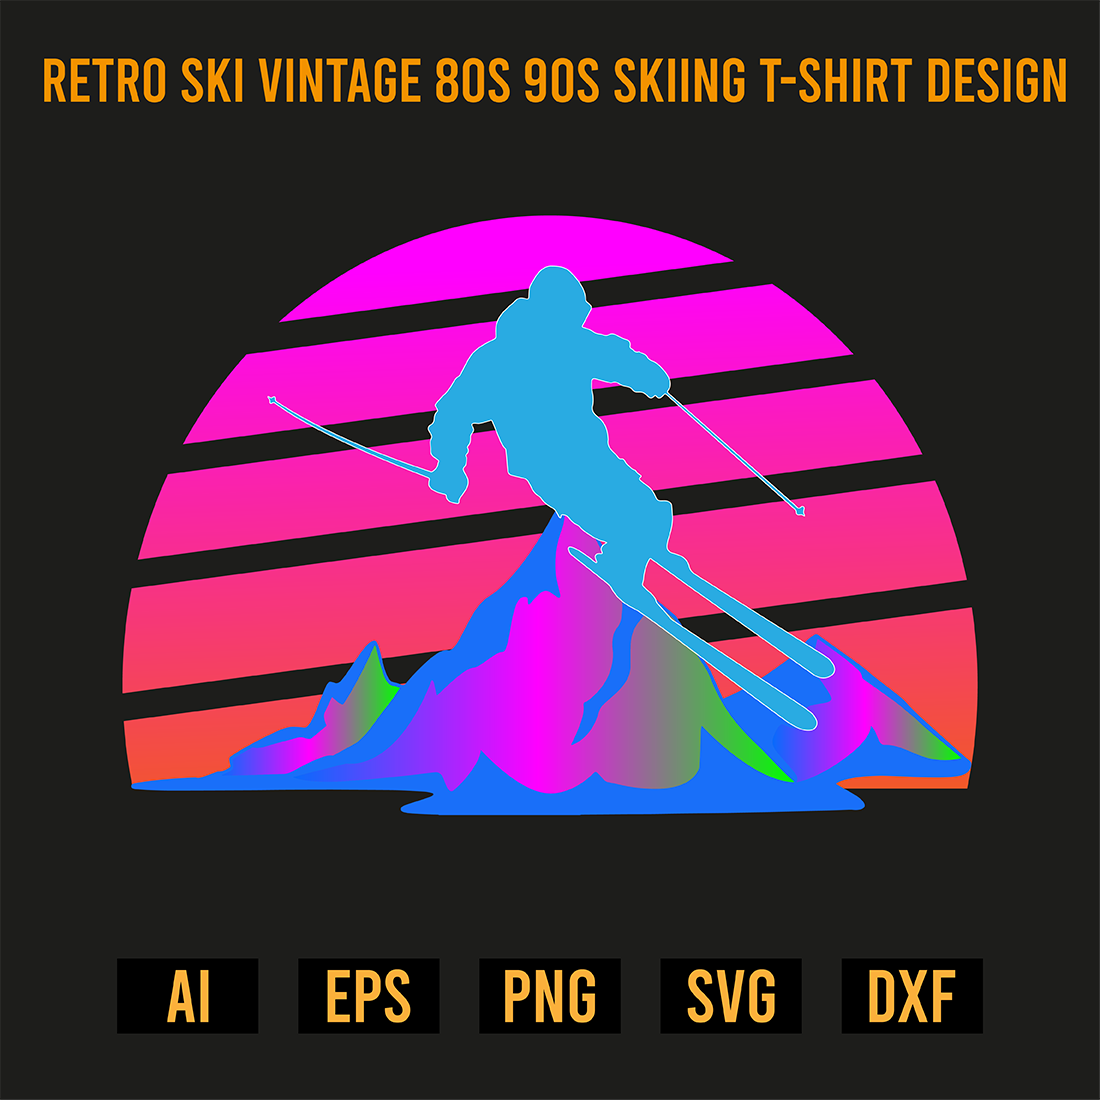 Retro Ski Vintage 80s 90s T-Shirt Design Graphic by Naznin sultana